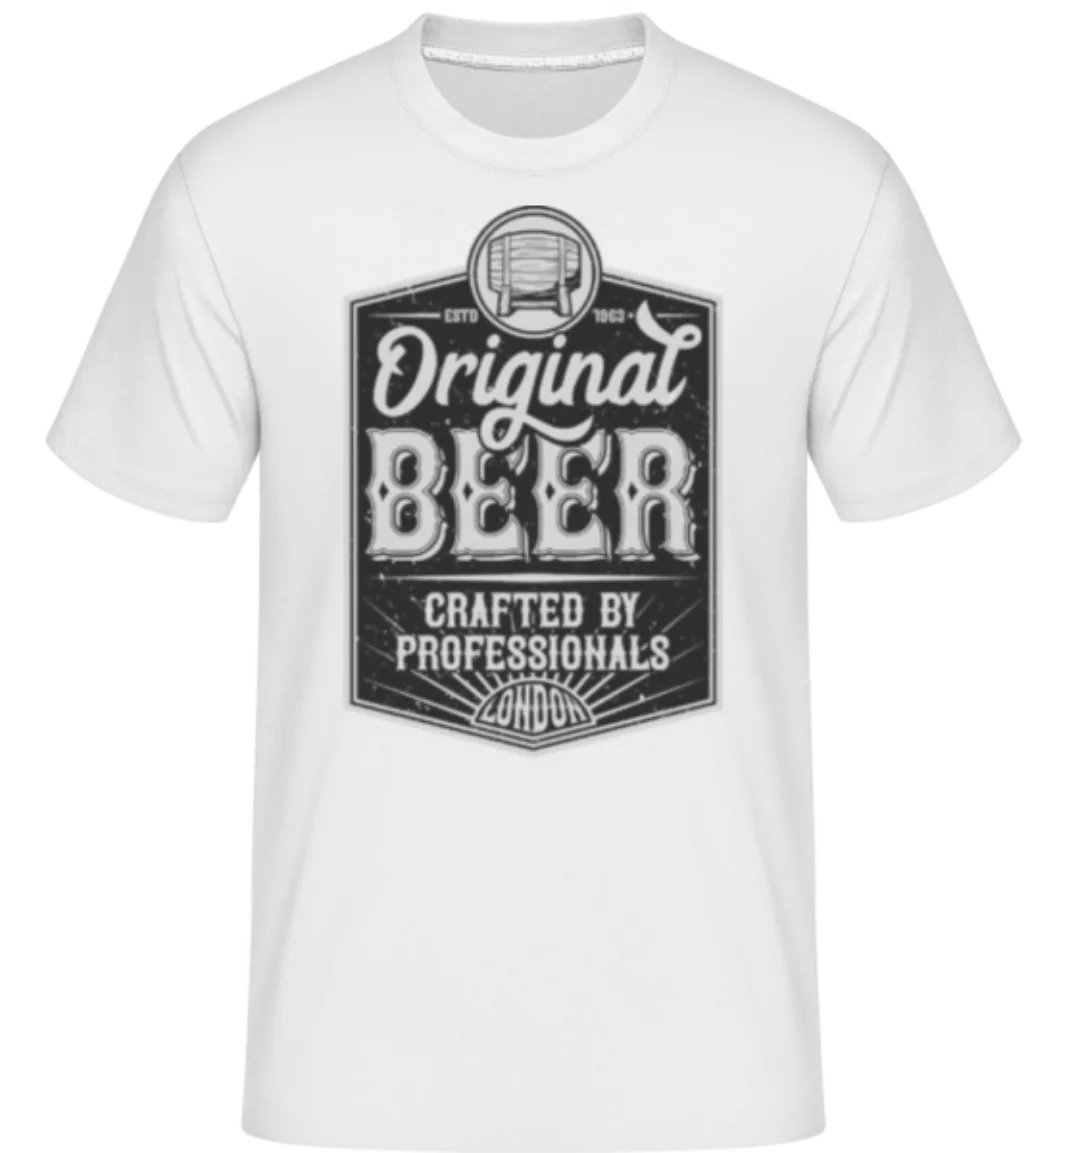 Original Beer · Shirtinator Männer T-Shirt günstig online kaufen